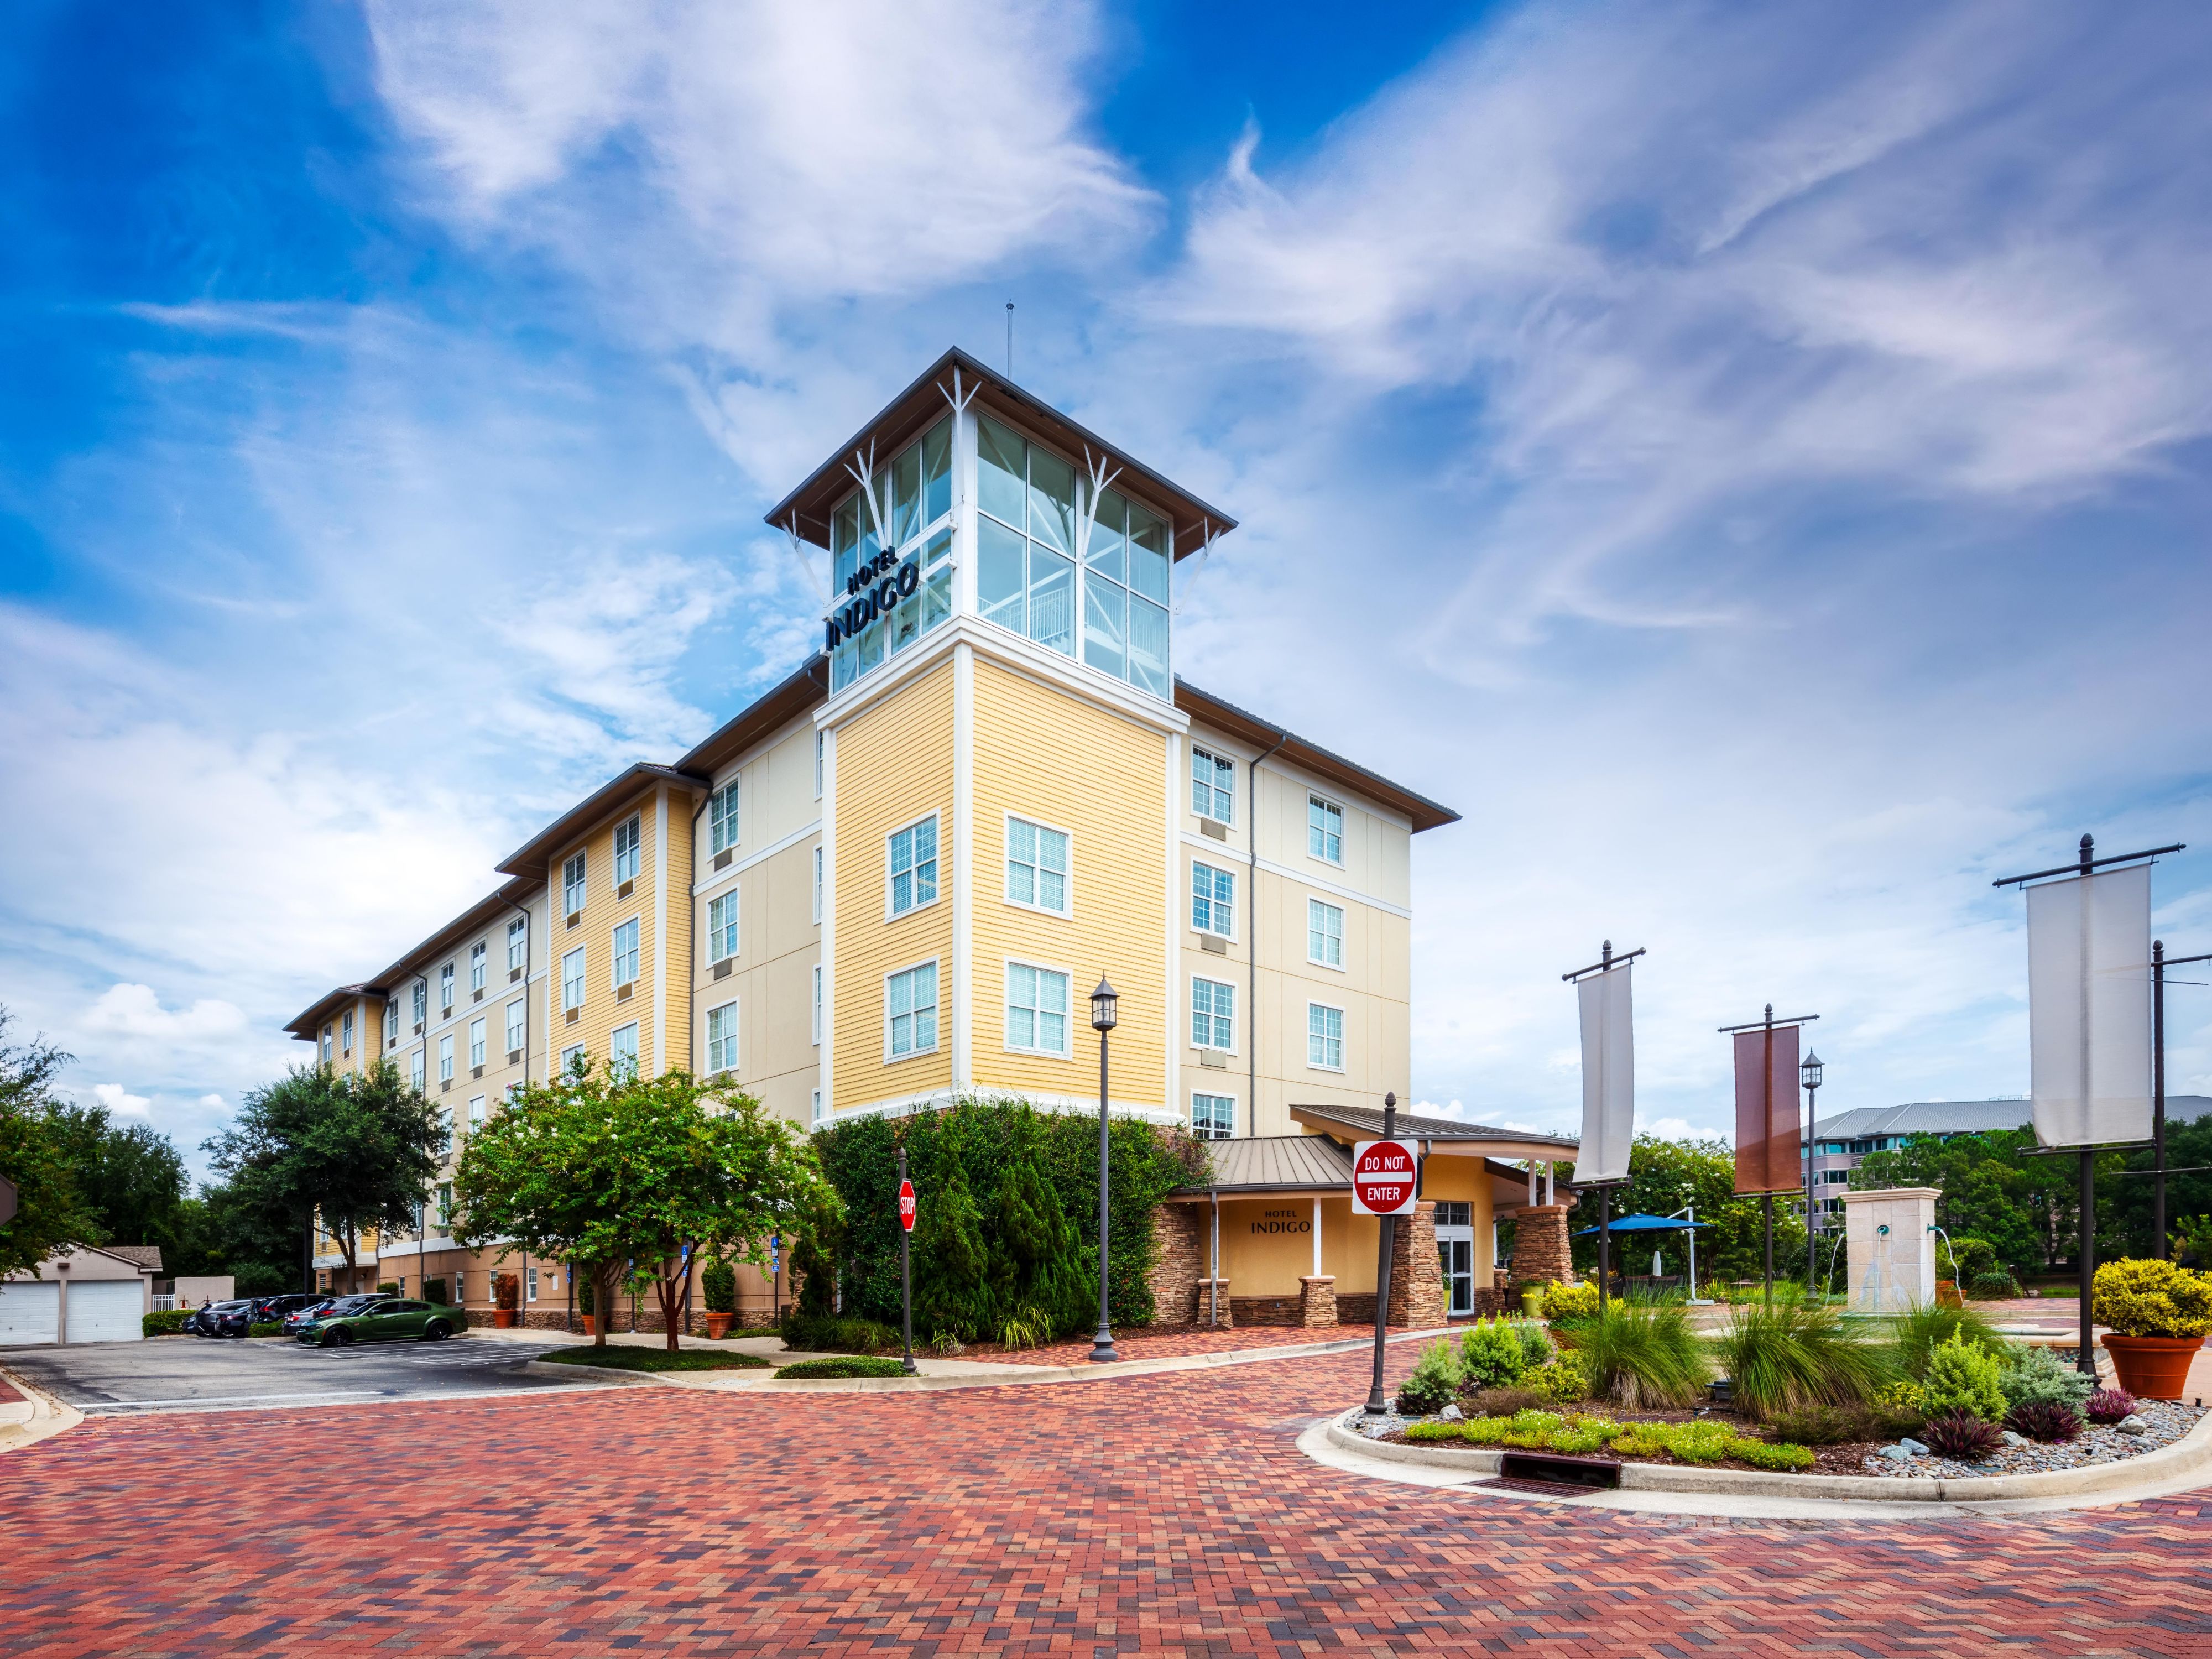 Jacksonville Hotels | Top 22 Hotels in Jacksonville, FL by IHG